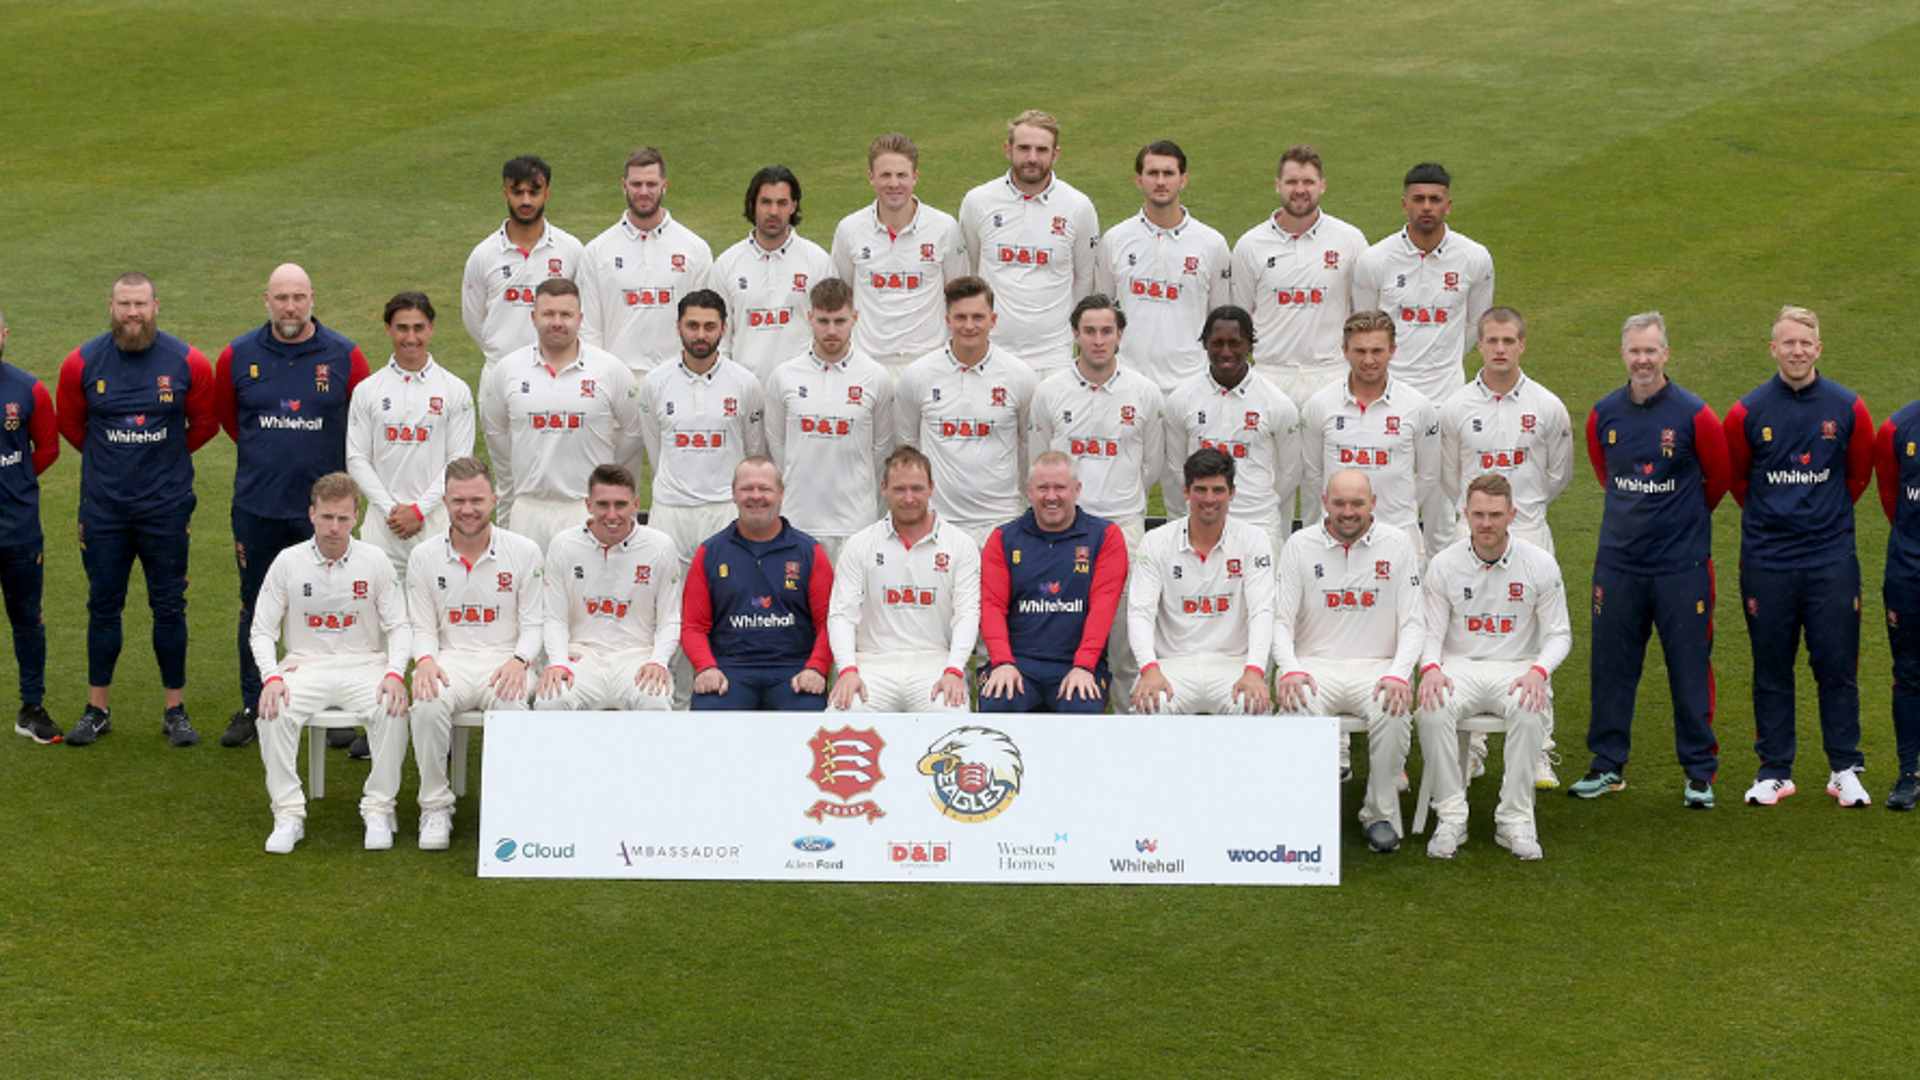 Essex squad in action (Courtesy: Essex Cricket)